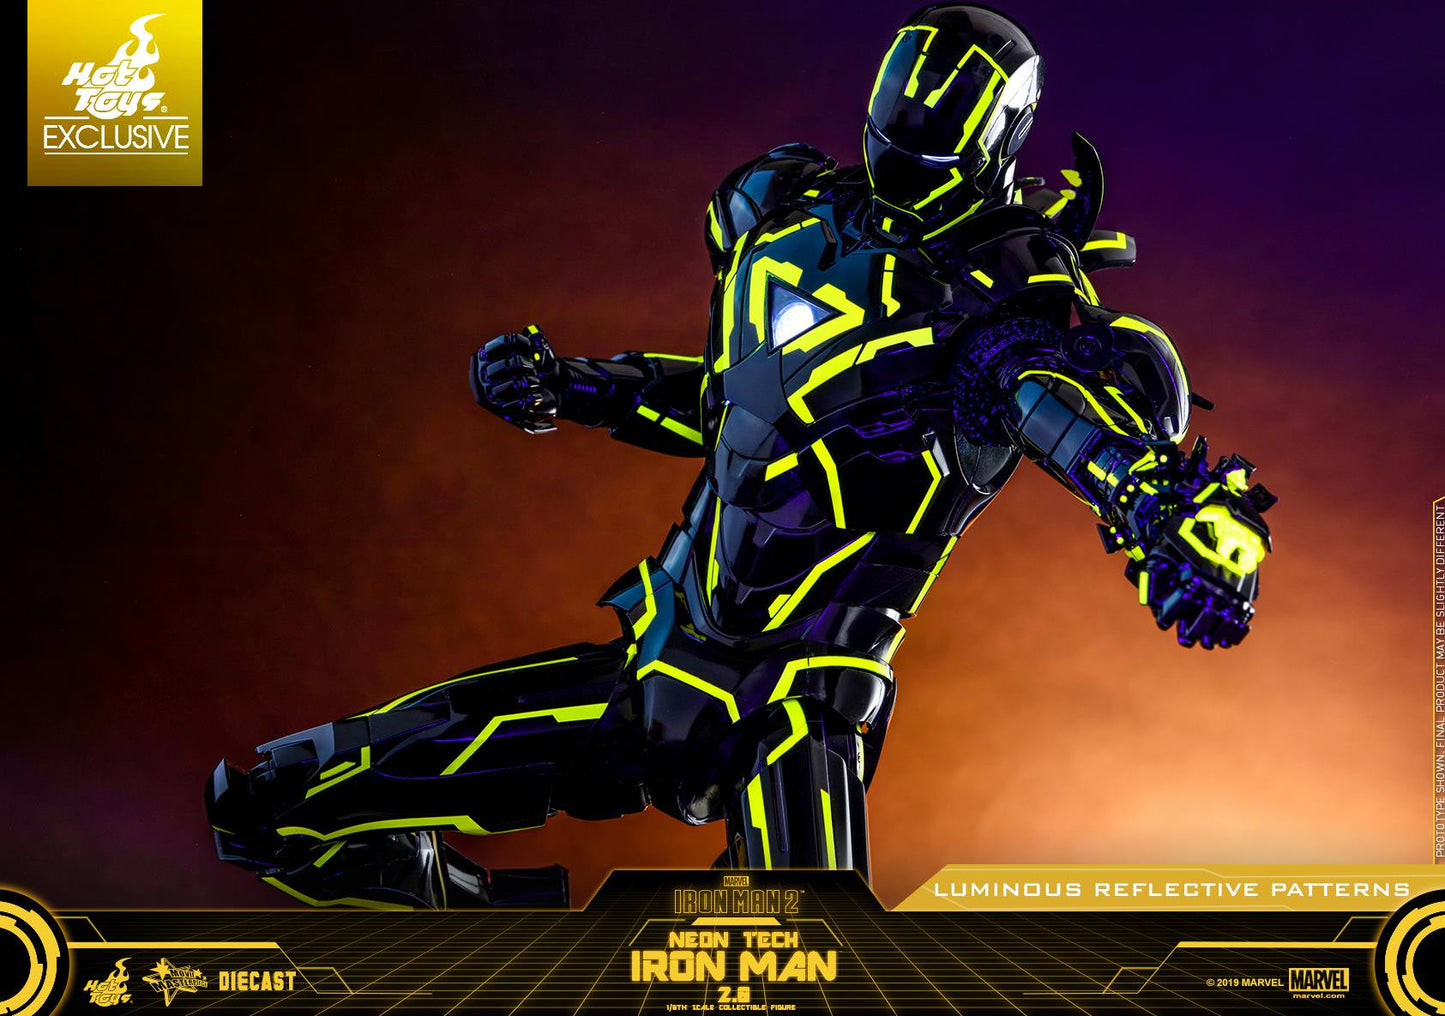 Iron Man Neon Tech 2.0 Exclusive 1/6 - Iron Man 2 Hot Toys Die-Cast Metal